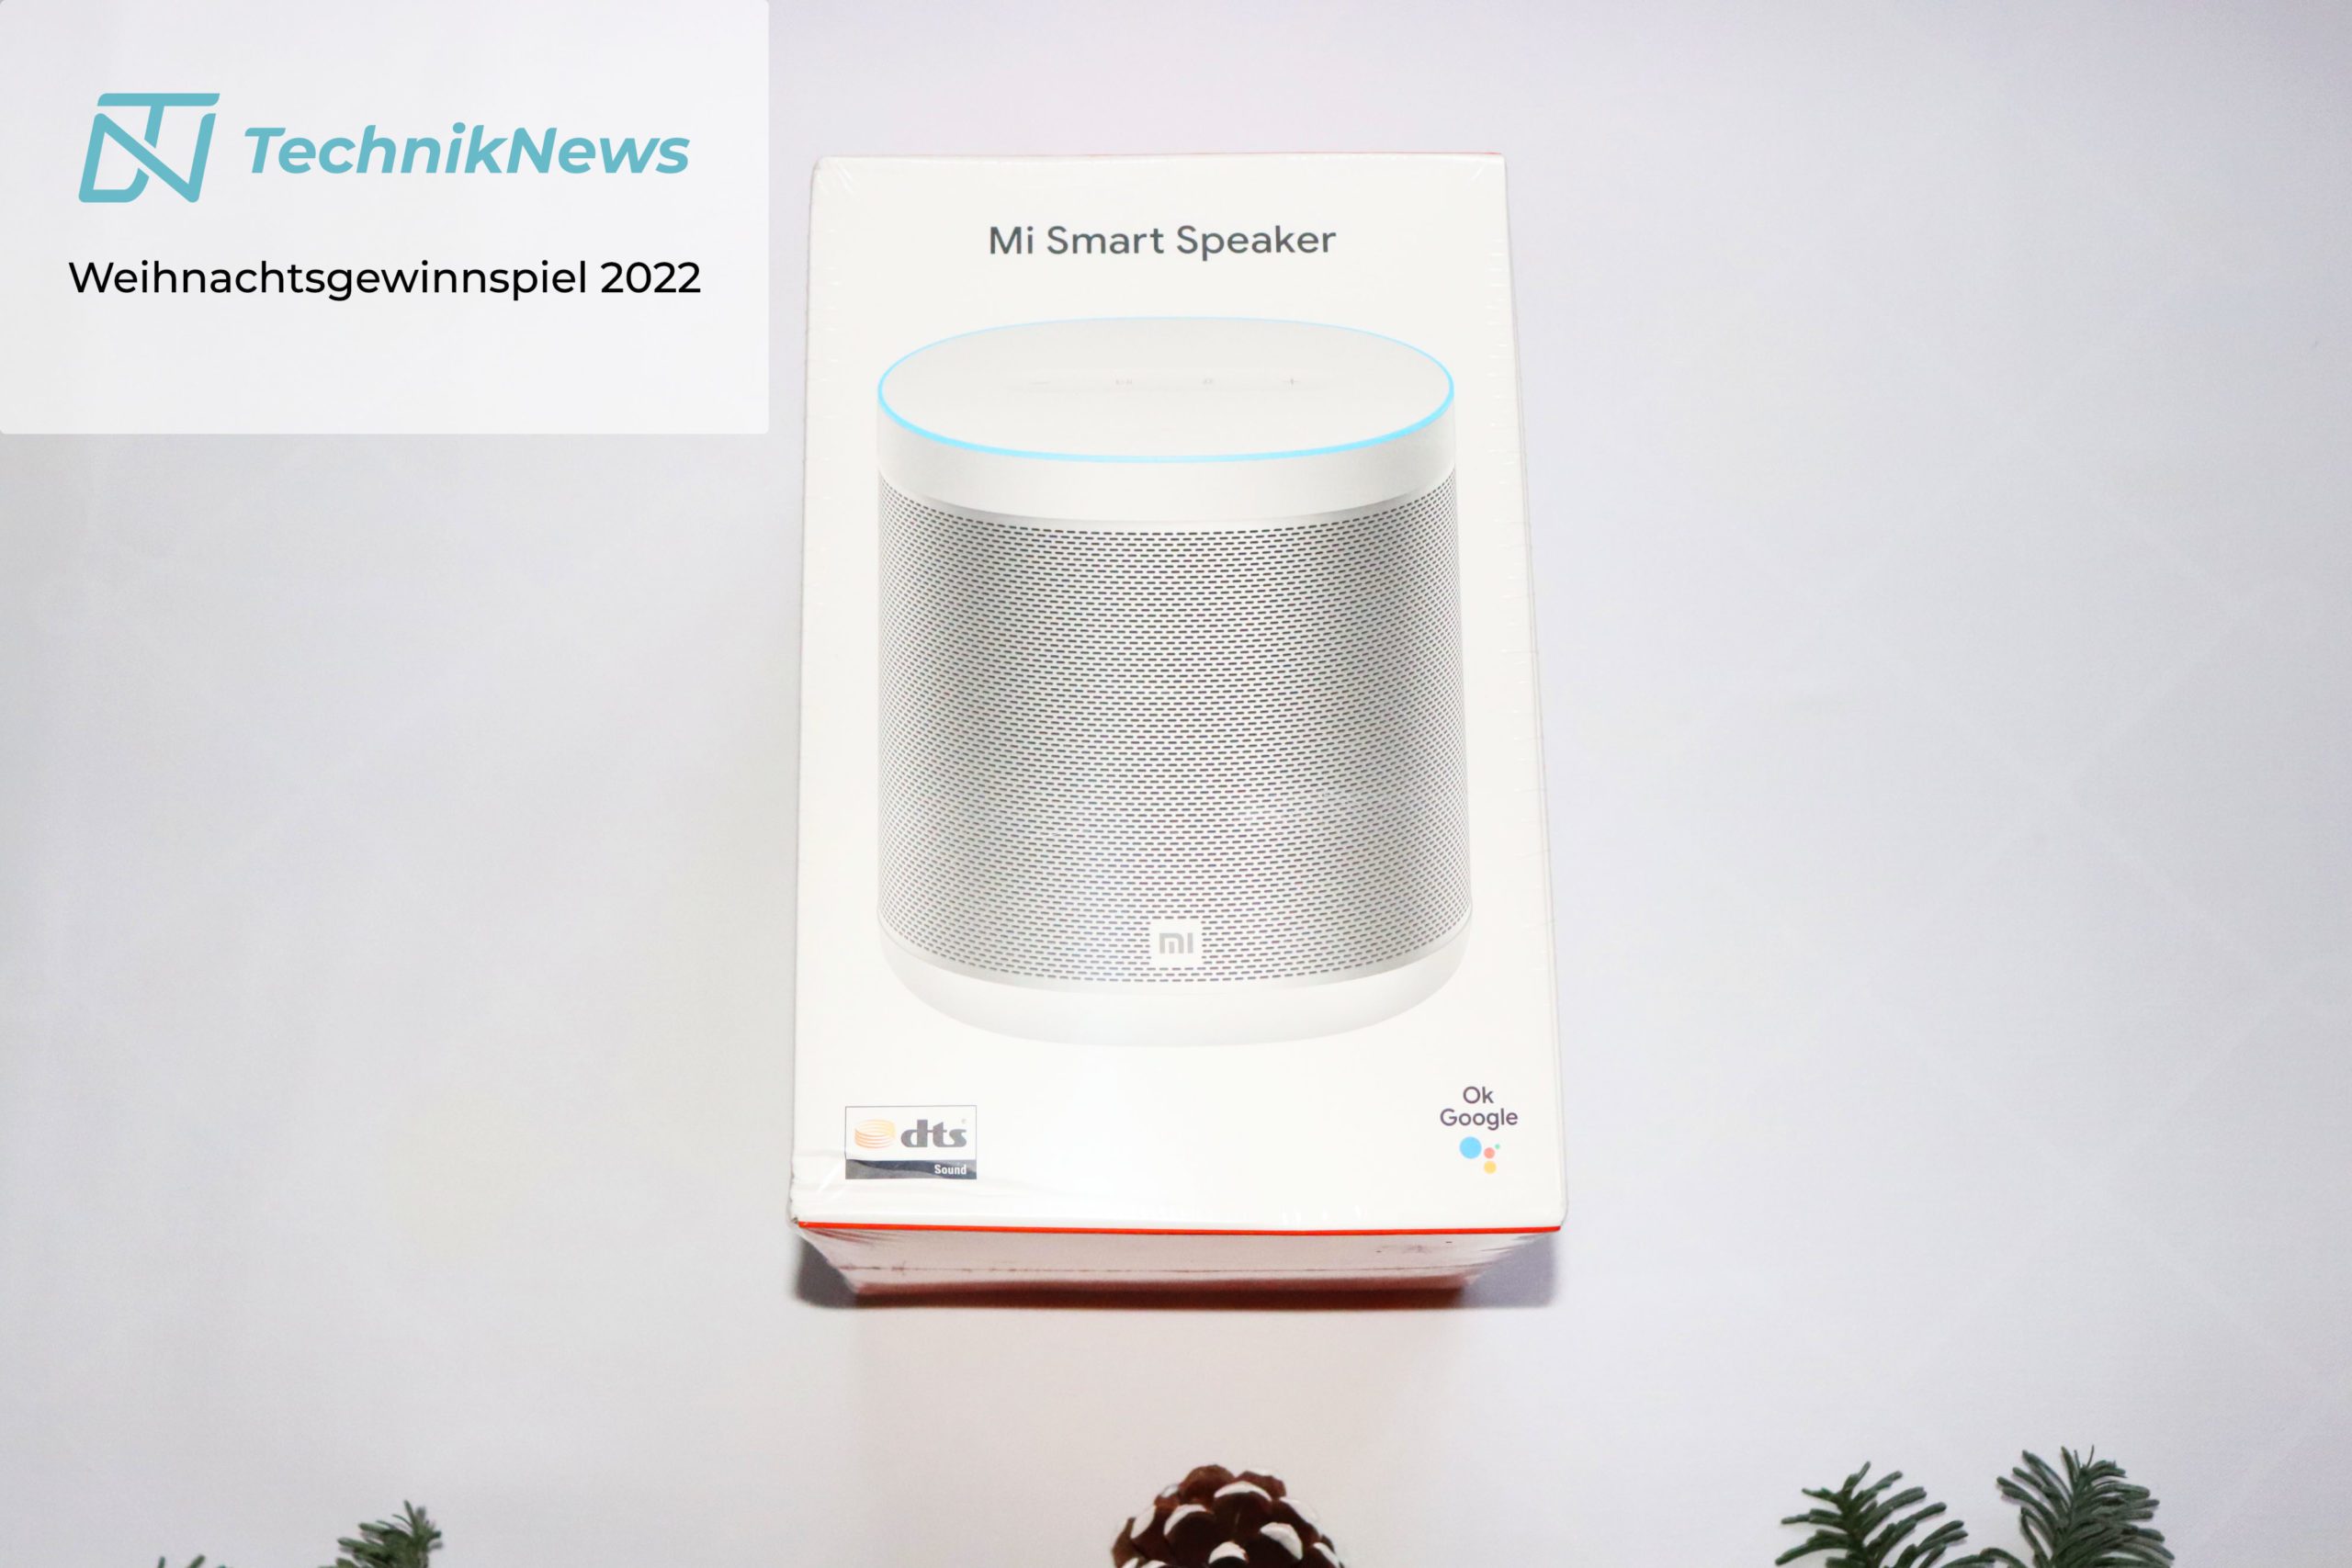 TechnikNews Christmas competition 2022 Xiaomi Mi Smart Speaker